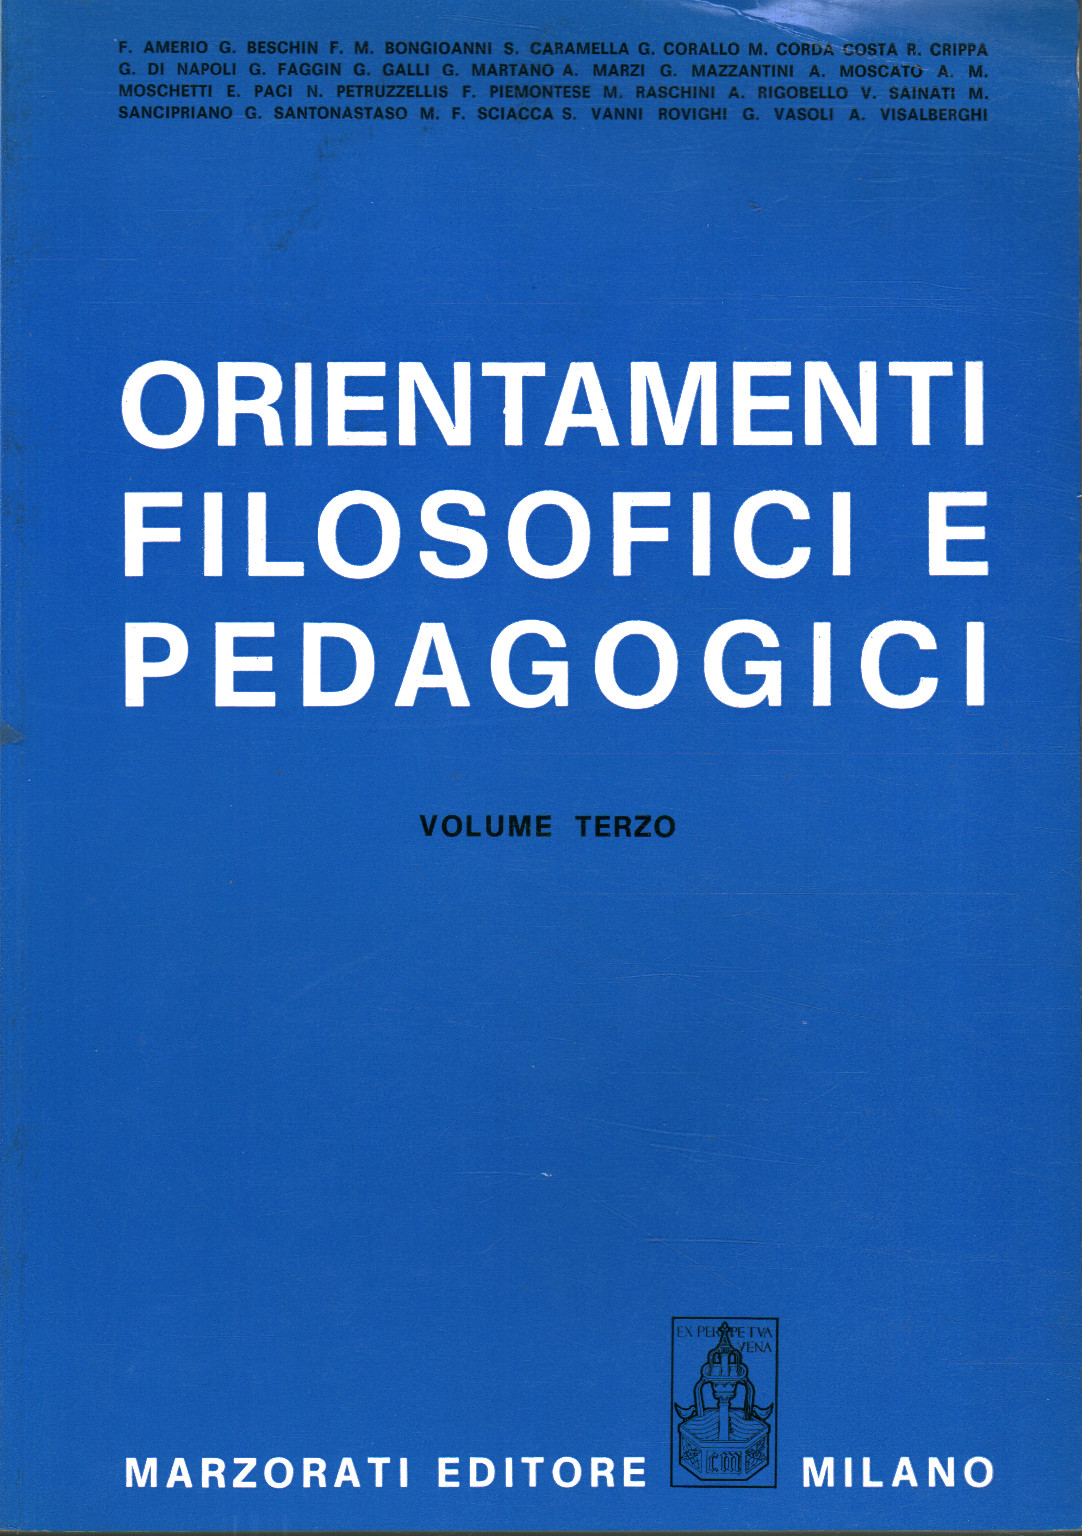 Orientamenti filosofici e pedagogici (volume terzo)